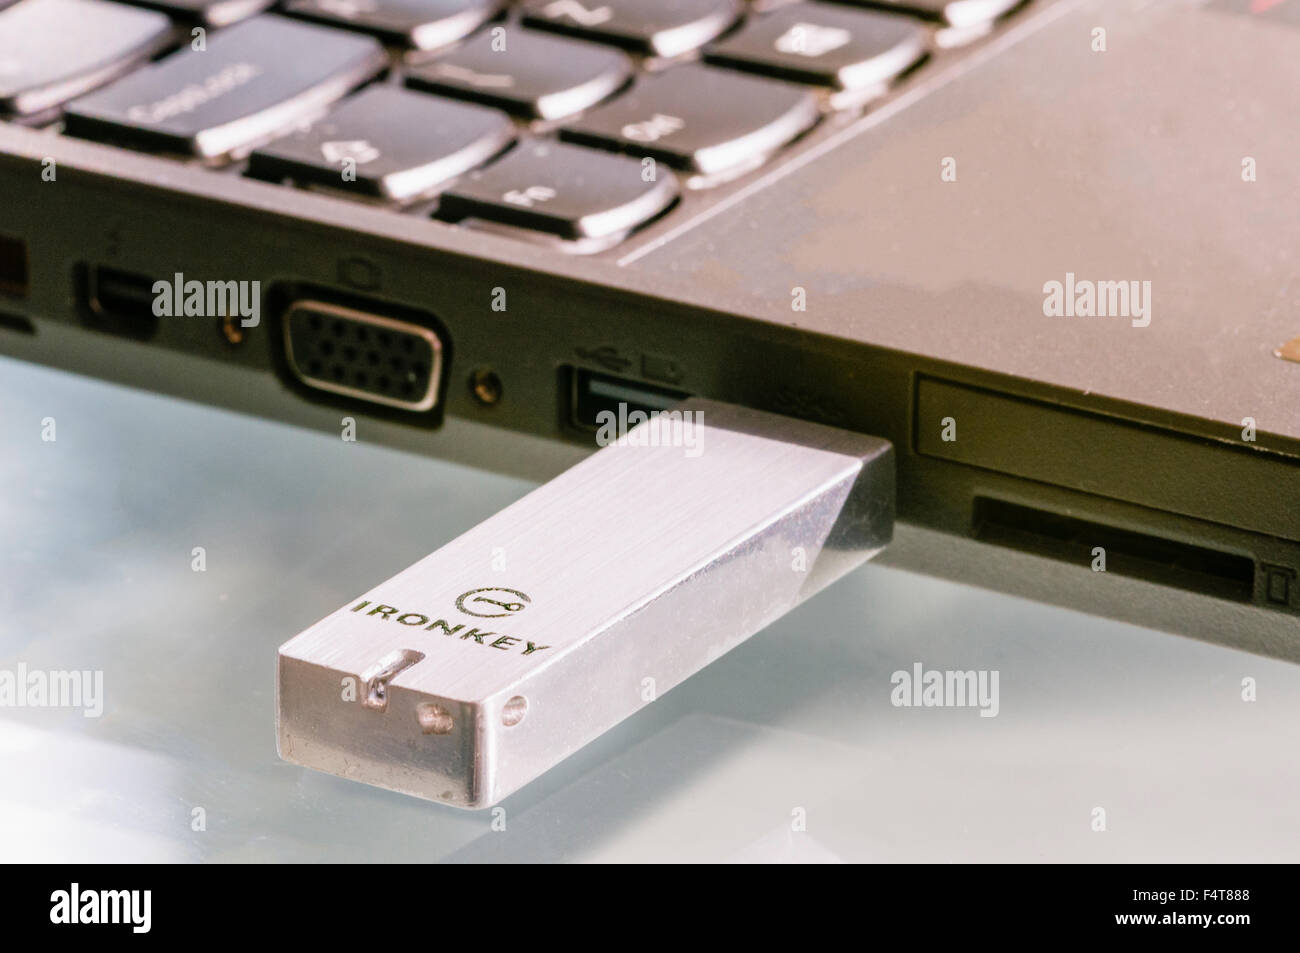 Ironkey secure USB memory stick thumbdrive Stock Photo